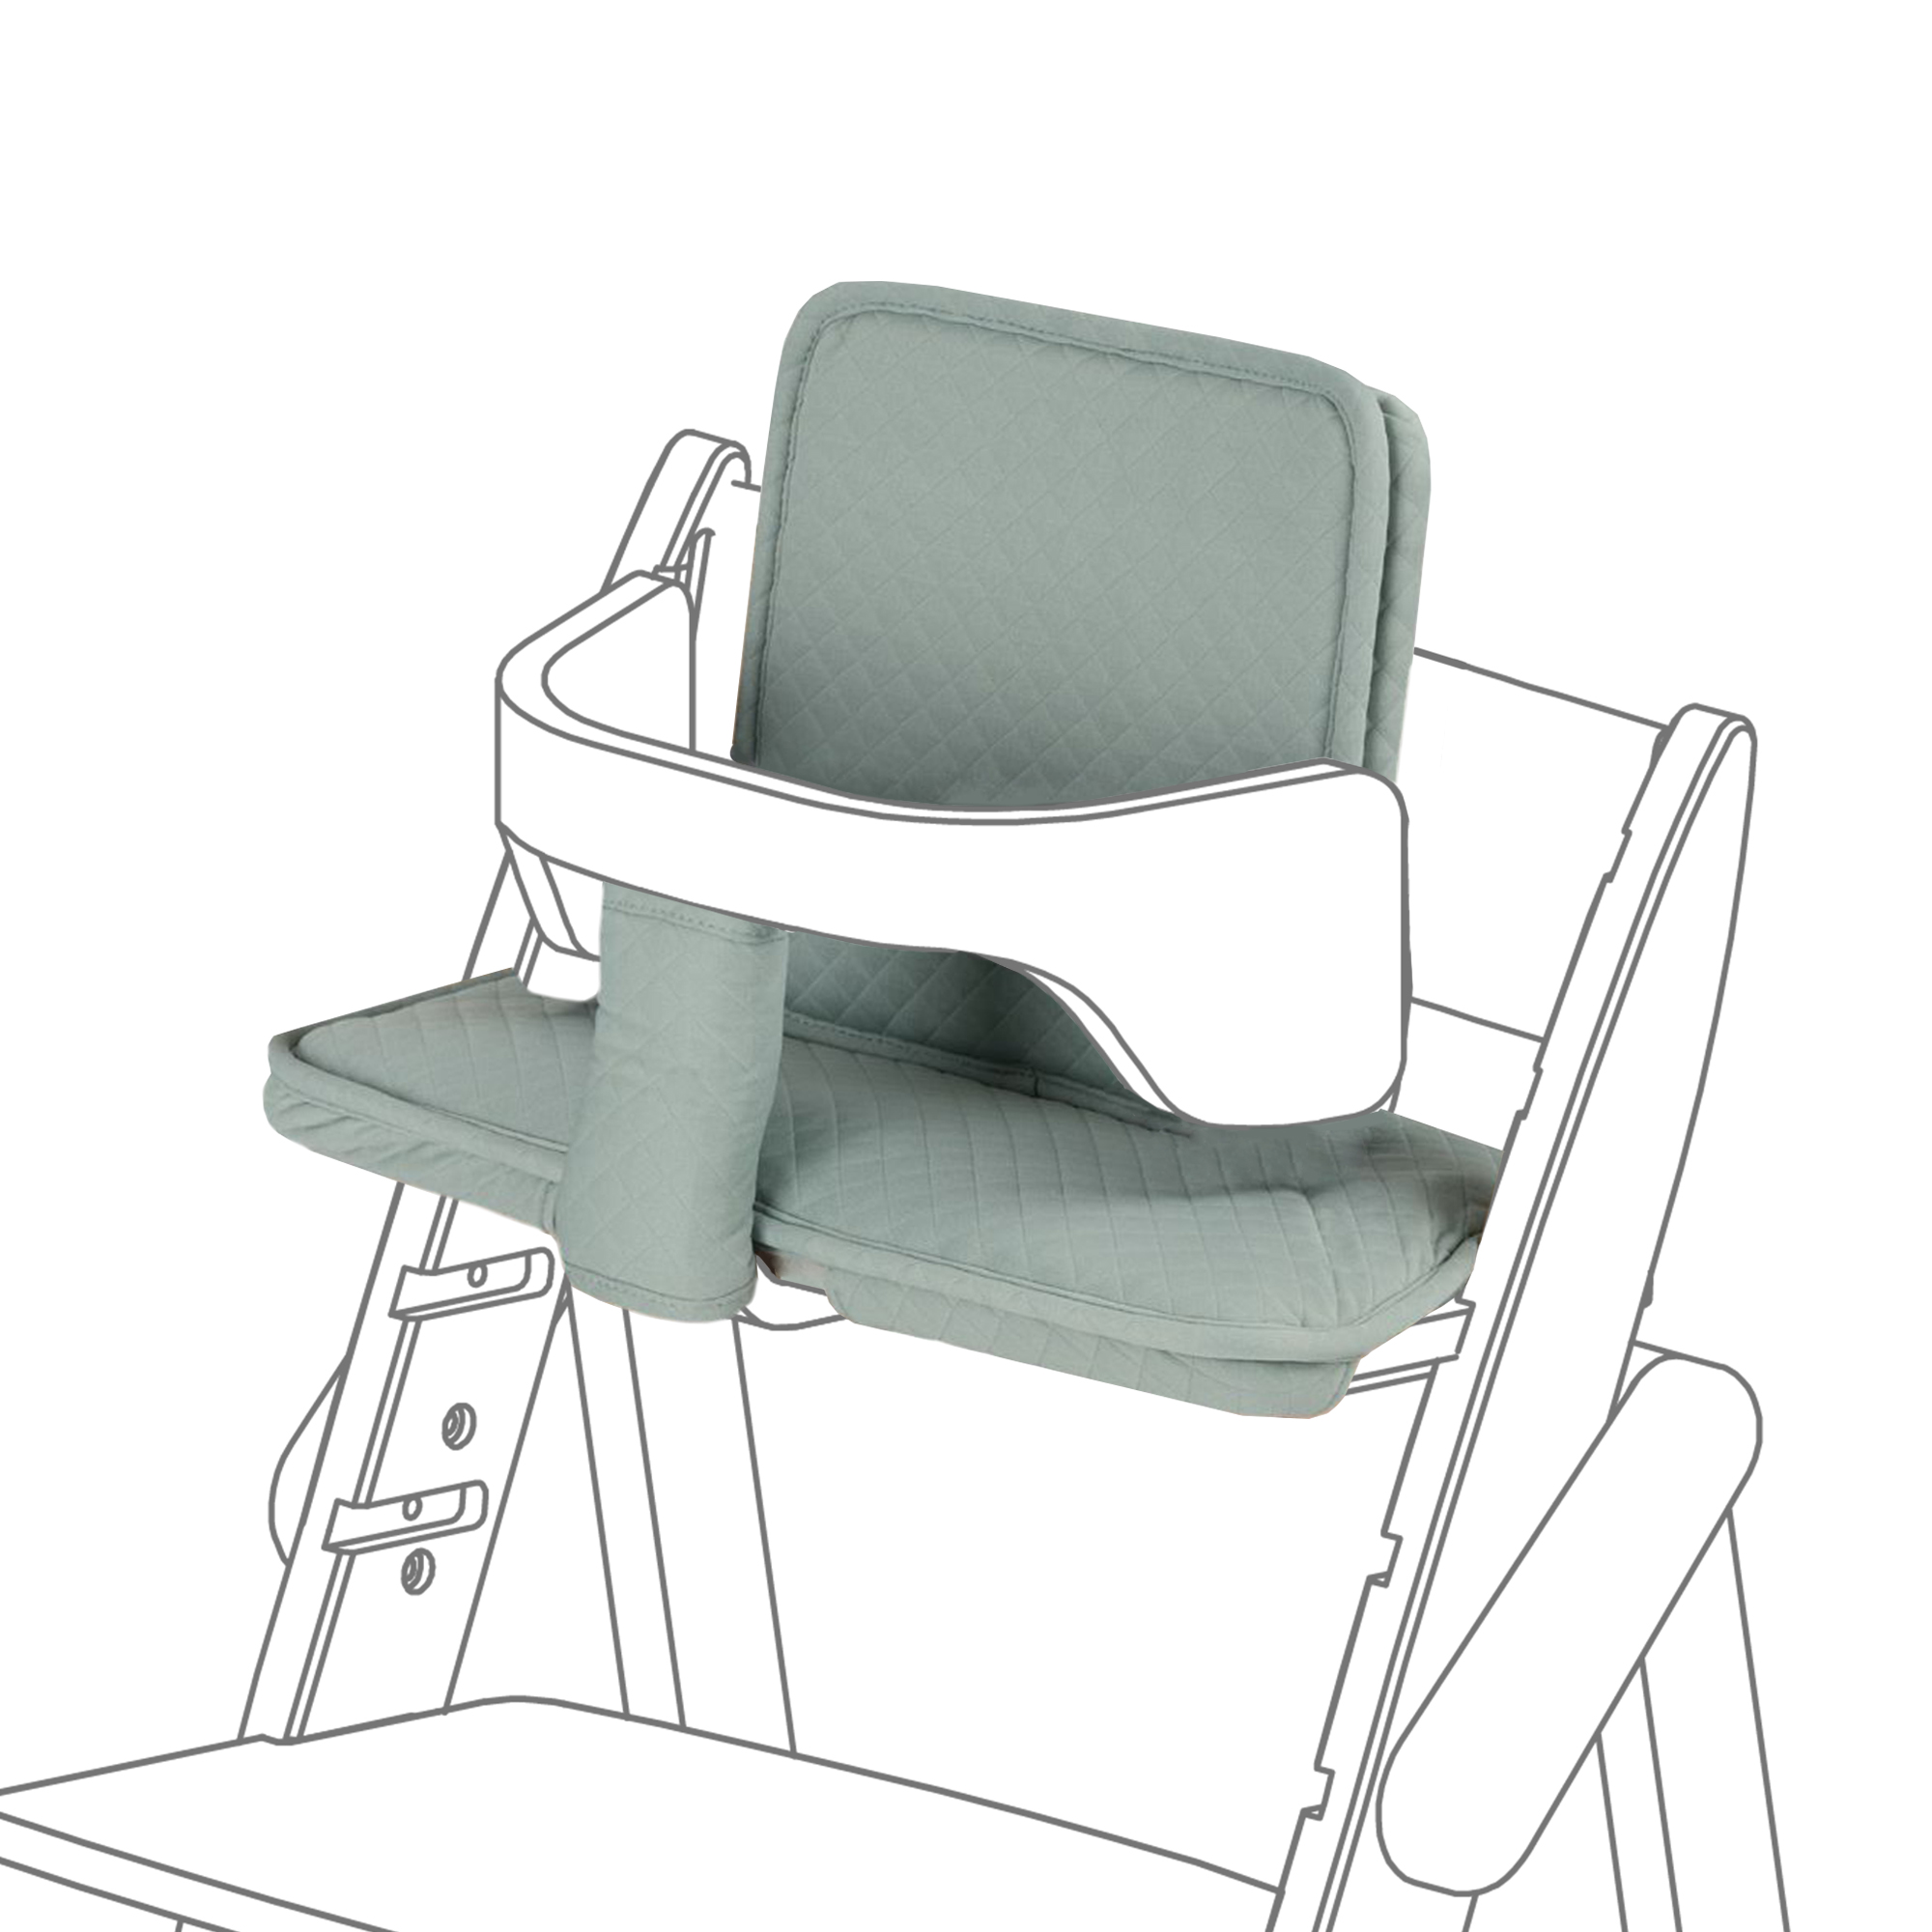 Набор подушек Moji Cushion Set для стульчика Yippy mint 12003342213 столешница moji food tray для крепления на стульчик yippy cloud 12003321601